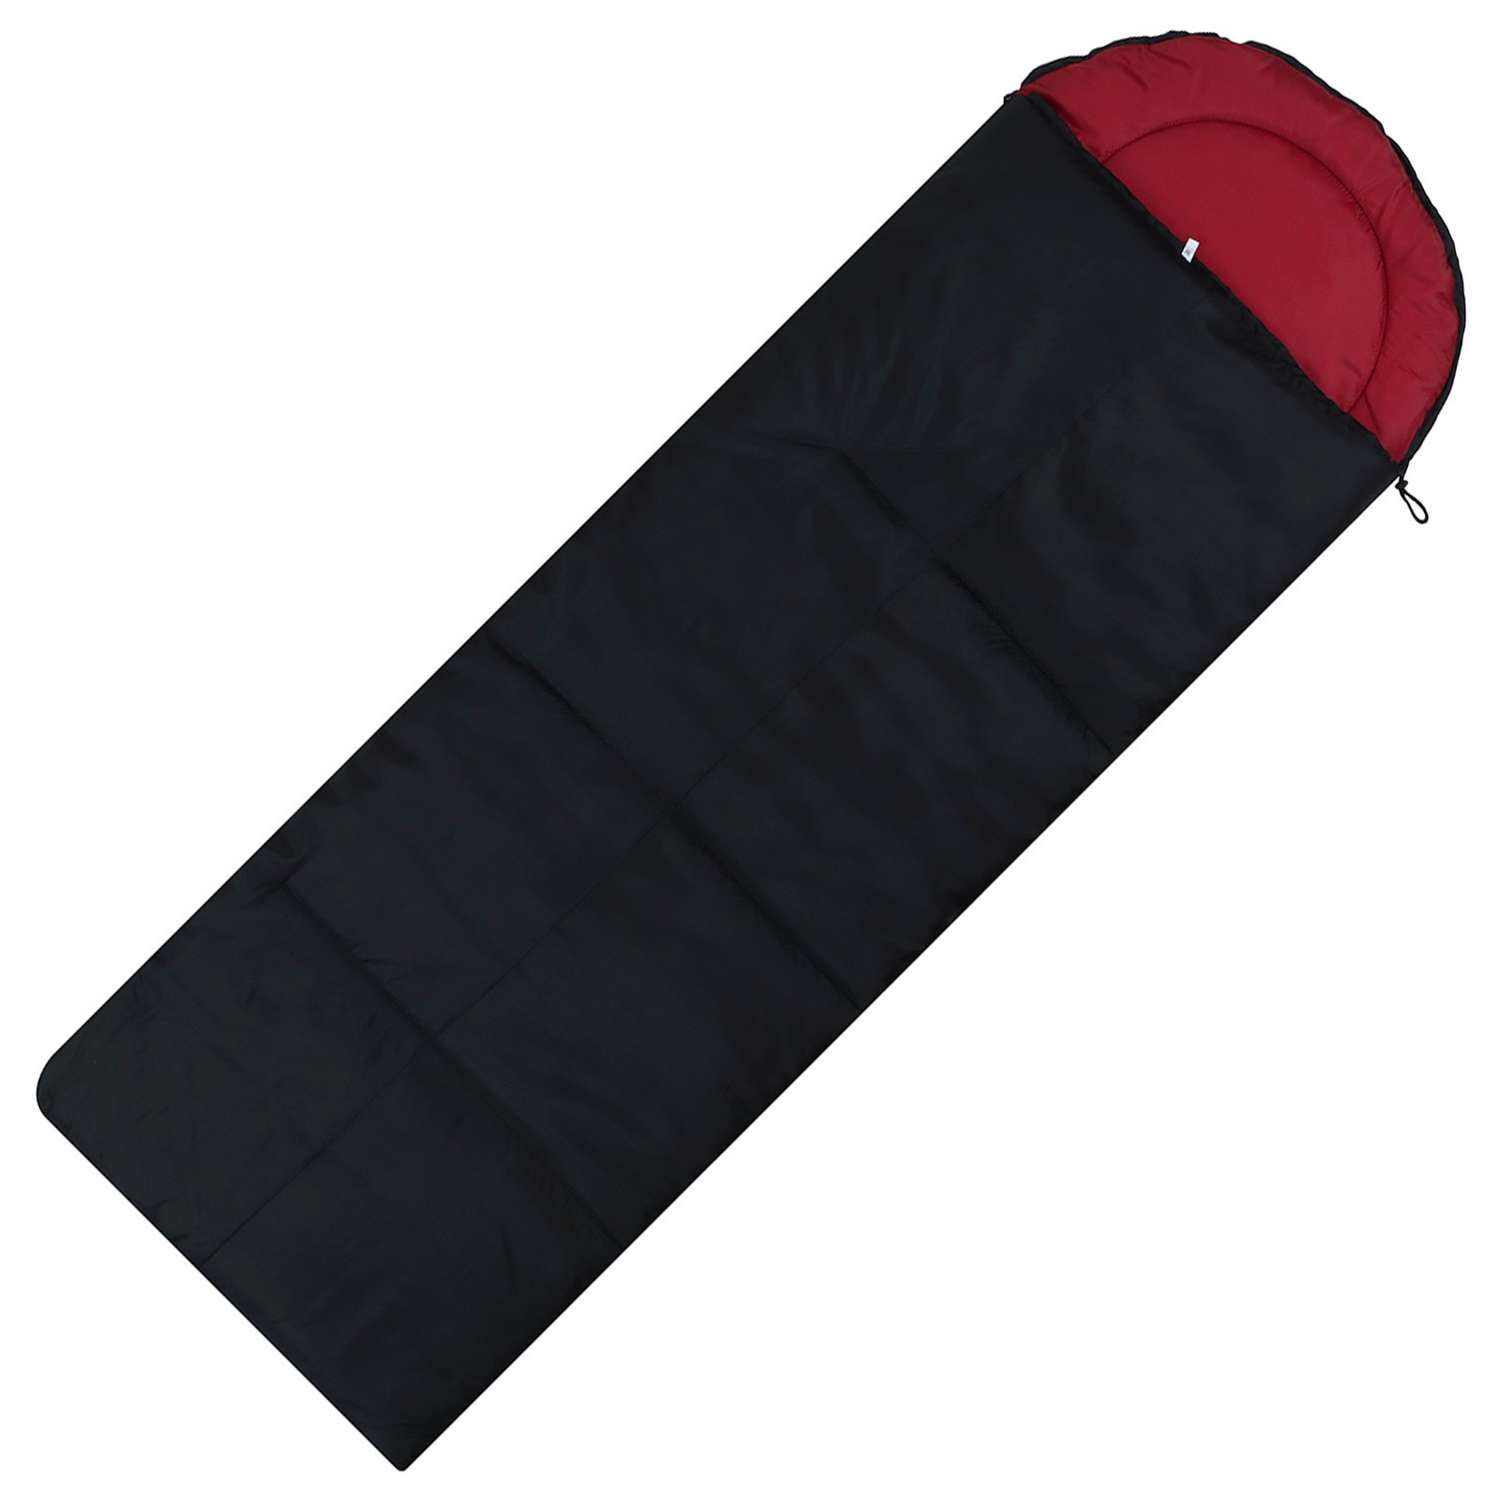 Спальник-одеяло Maclay с подголовником 235х80 см до -15°С - фото 7